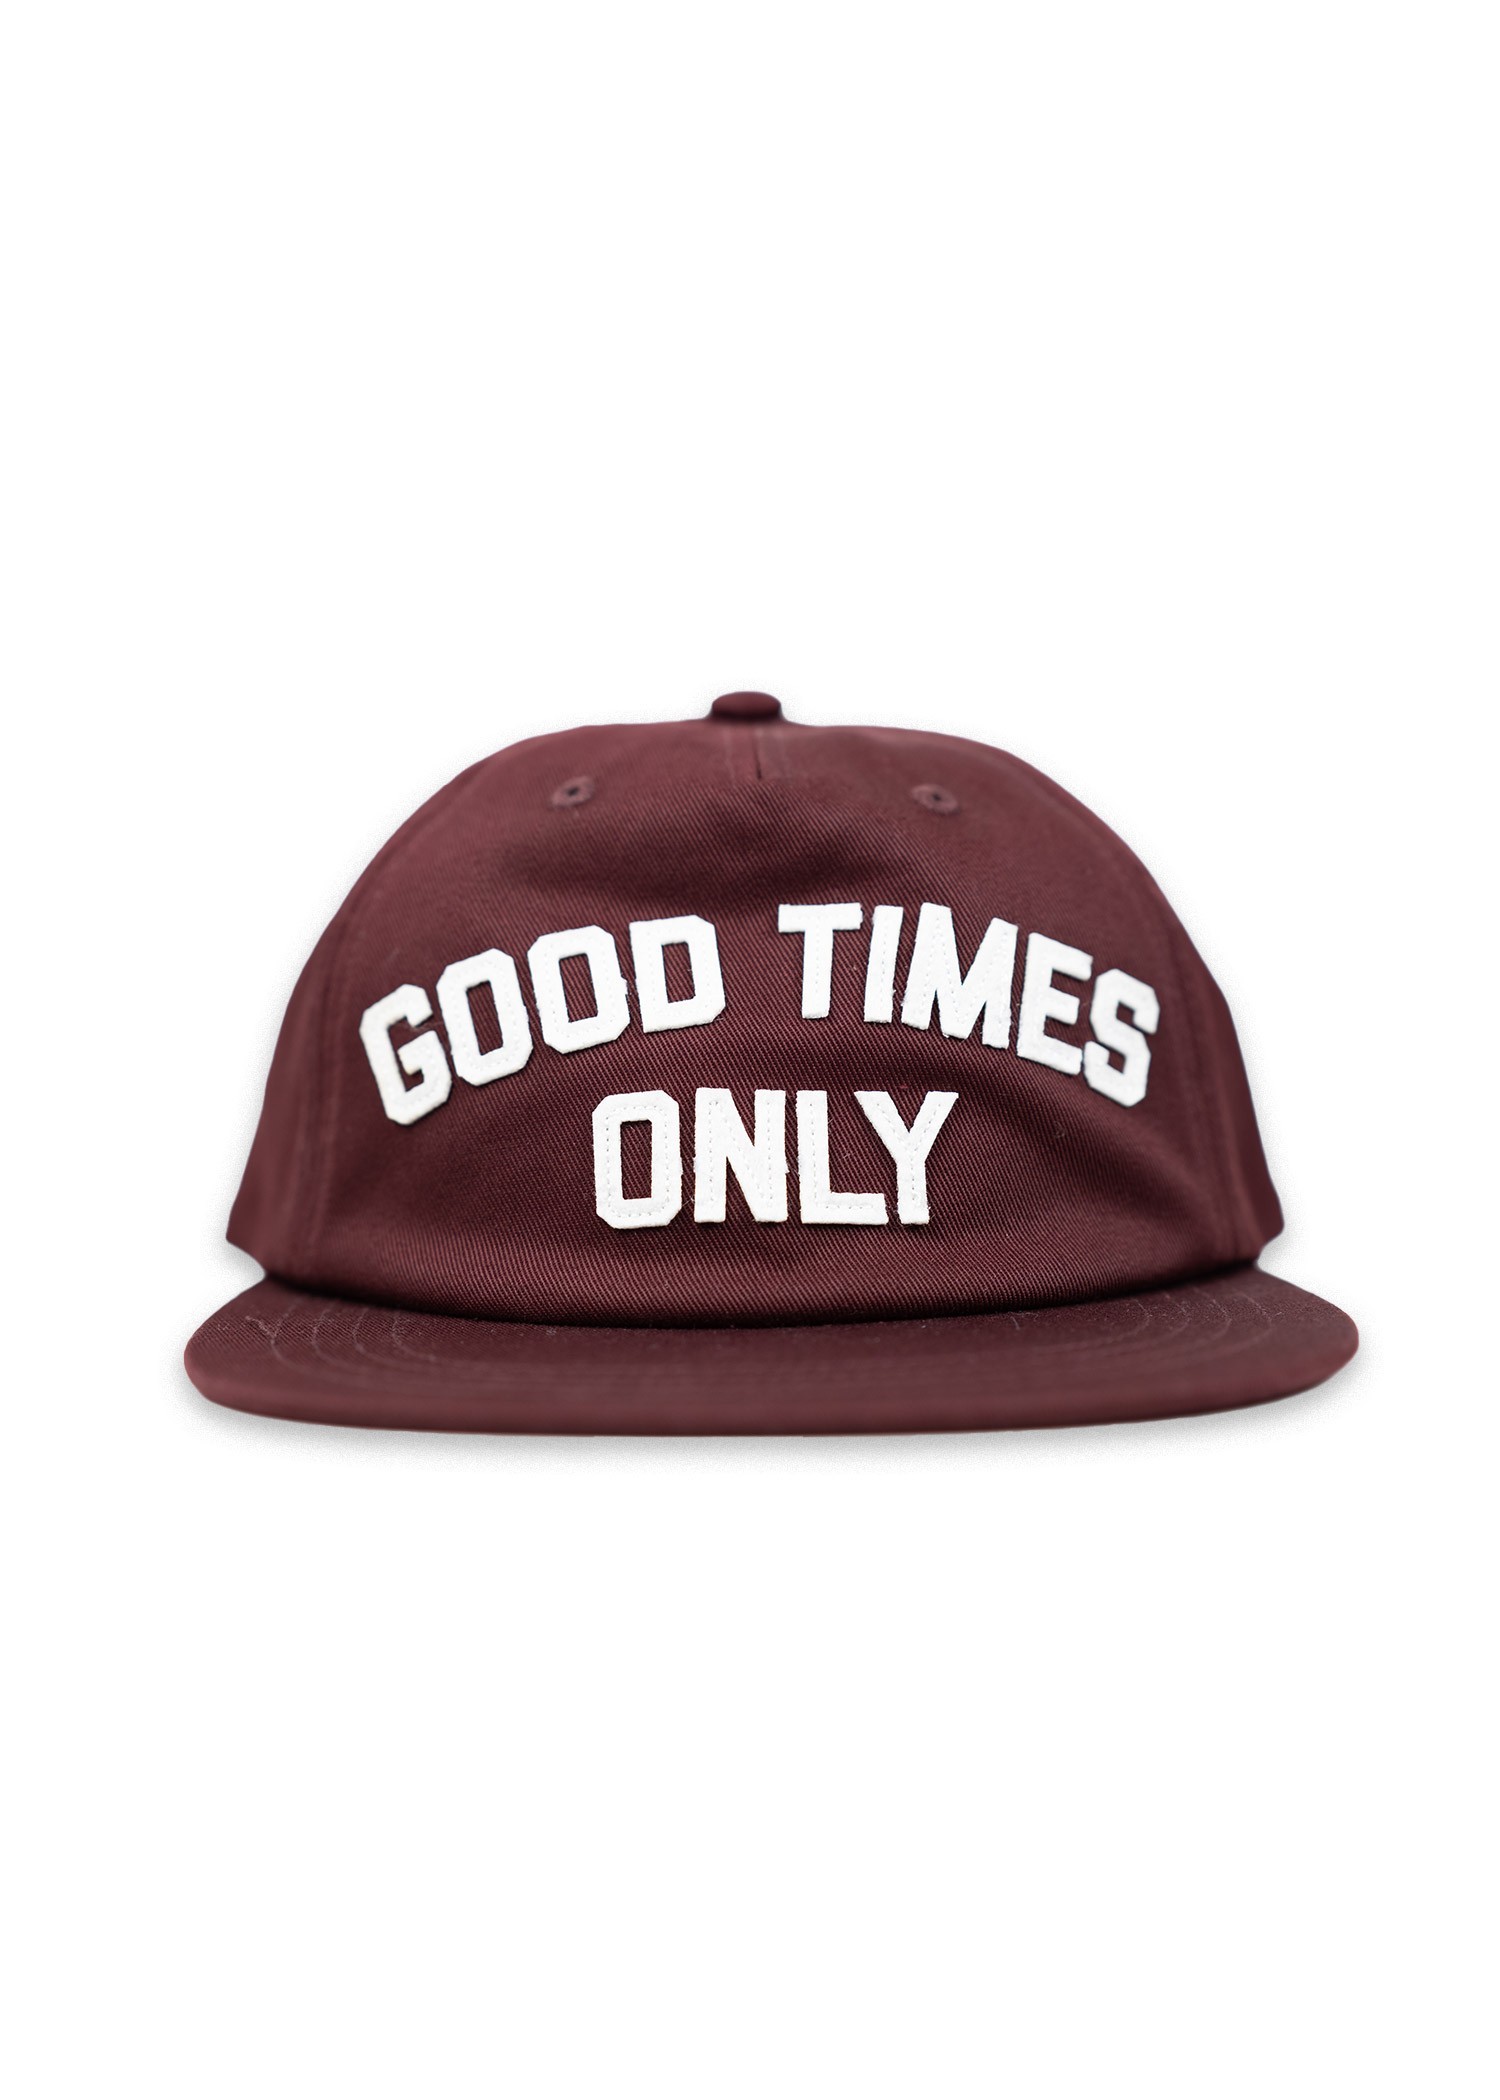 Good Times Only Hat - Produits a traiter